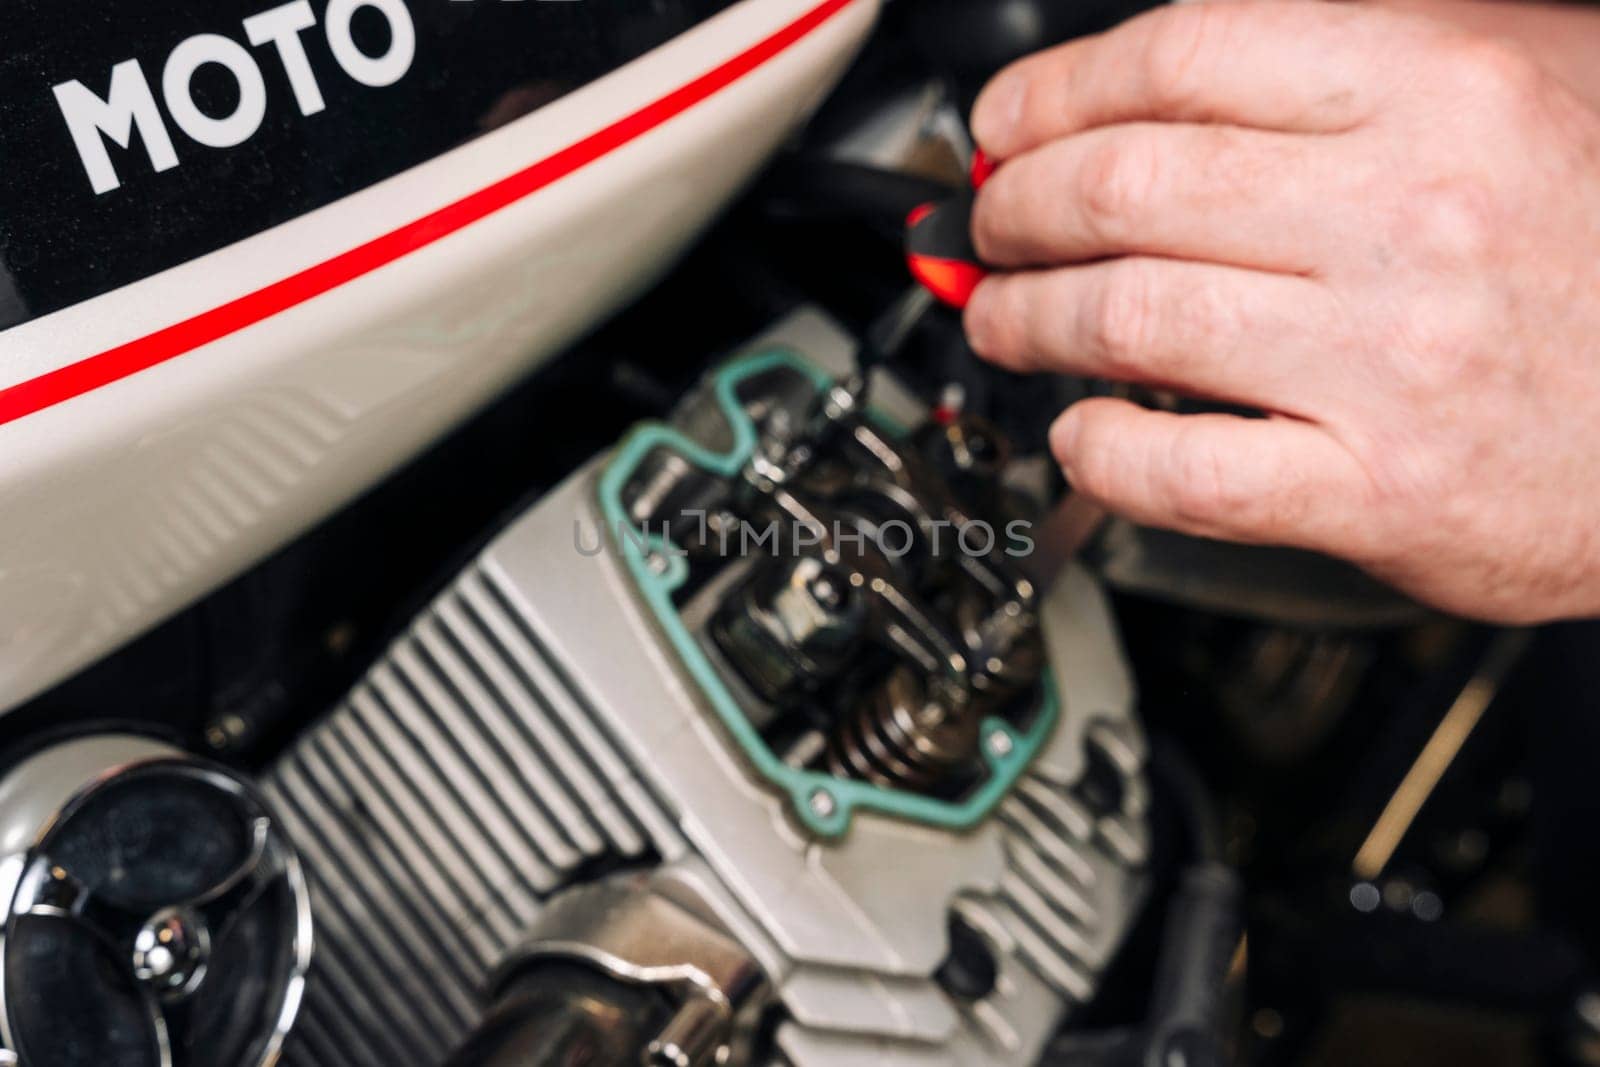 adjusting engine valves of motorcycle at the workshop by audiznam2609